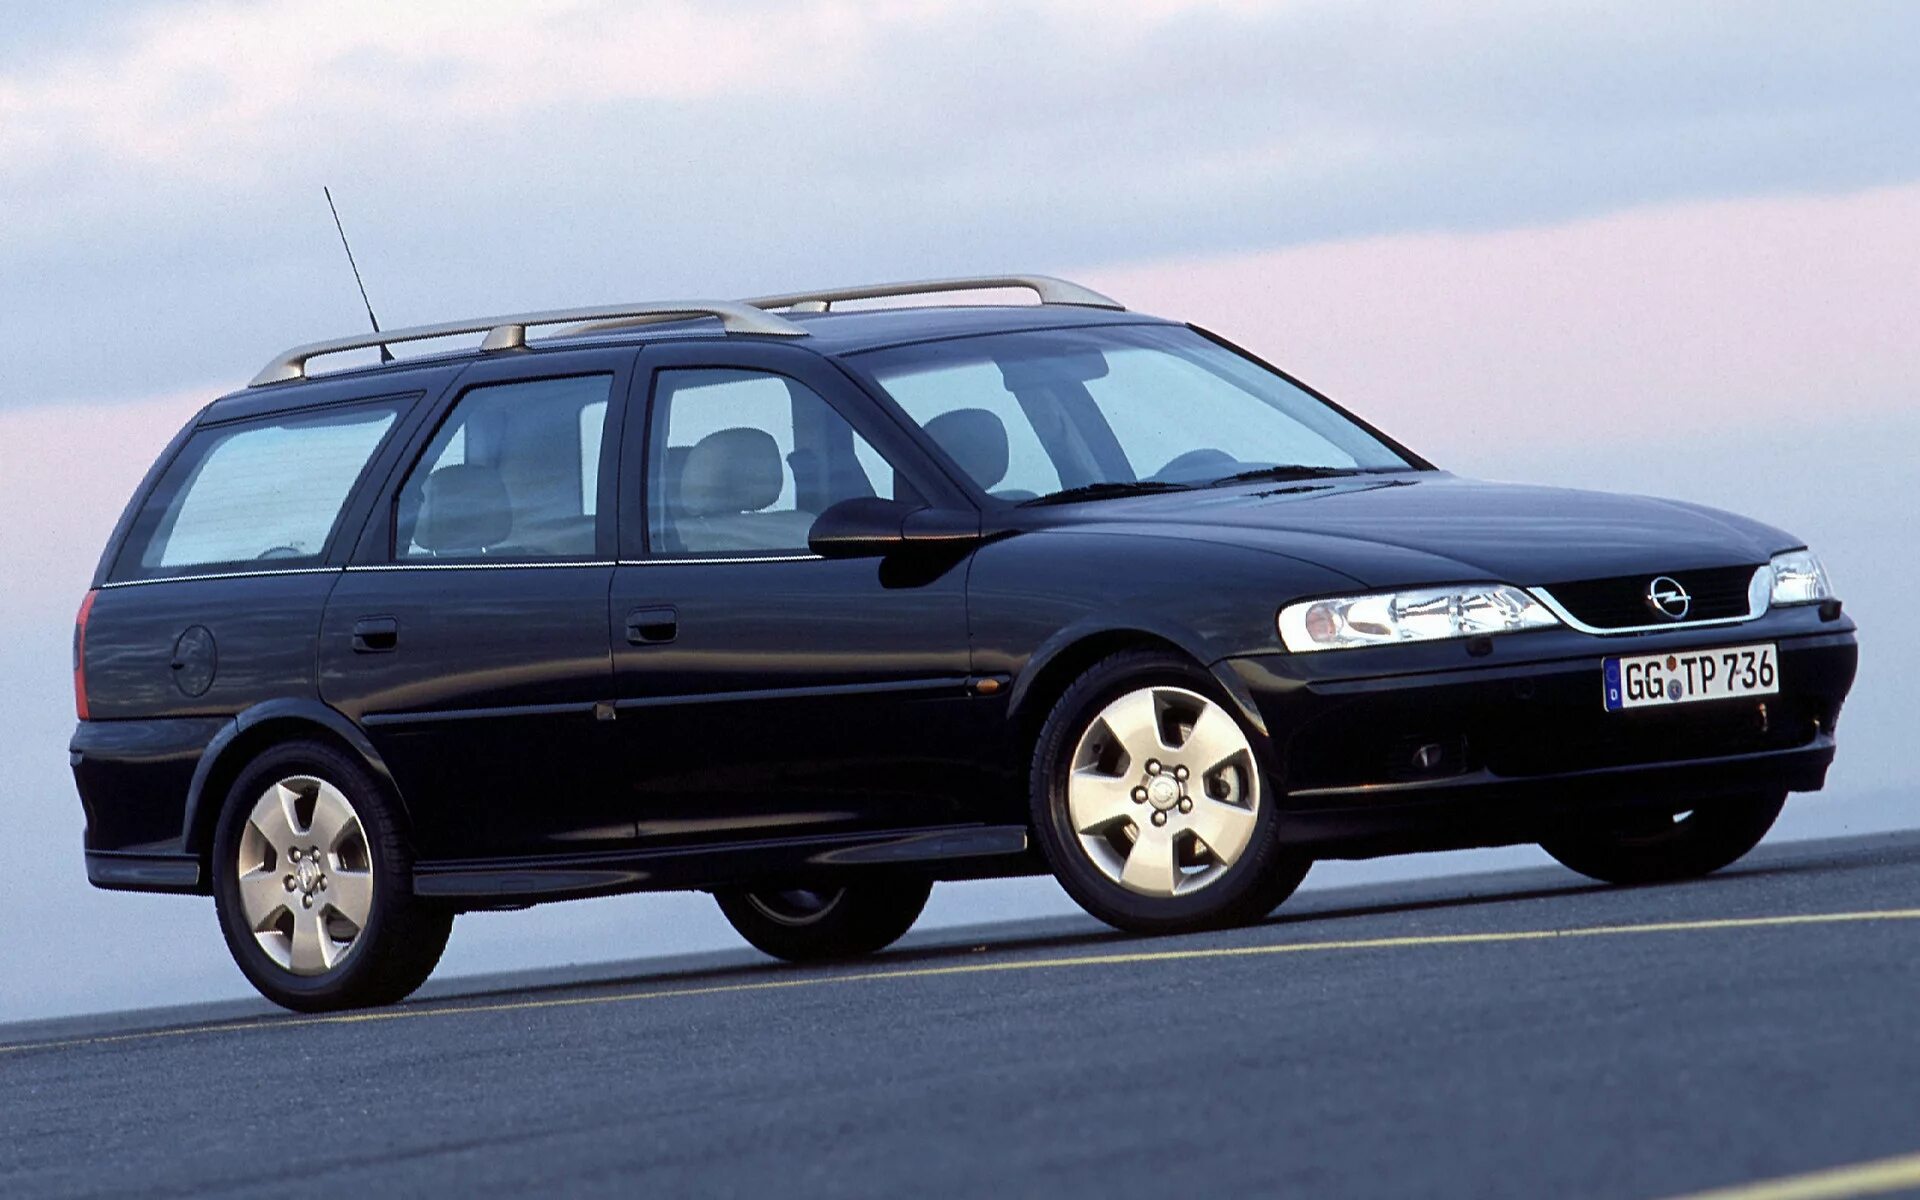 Opel Vectra 2000 универсал. Opel Vectra b 2001 универсал. Opel Vectra b 1998 универсал. Opel Vectra b универсал 2002. Универсал б 1